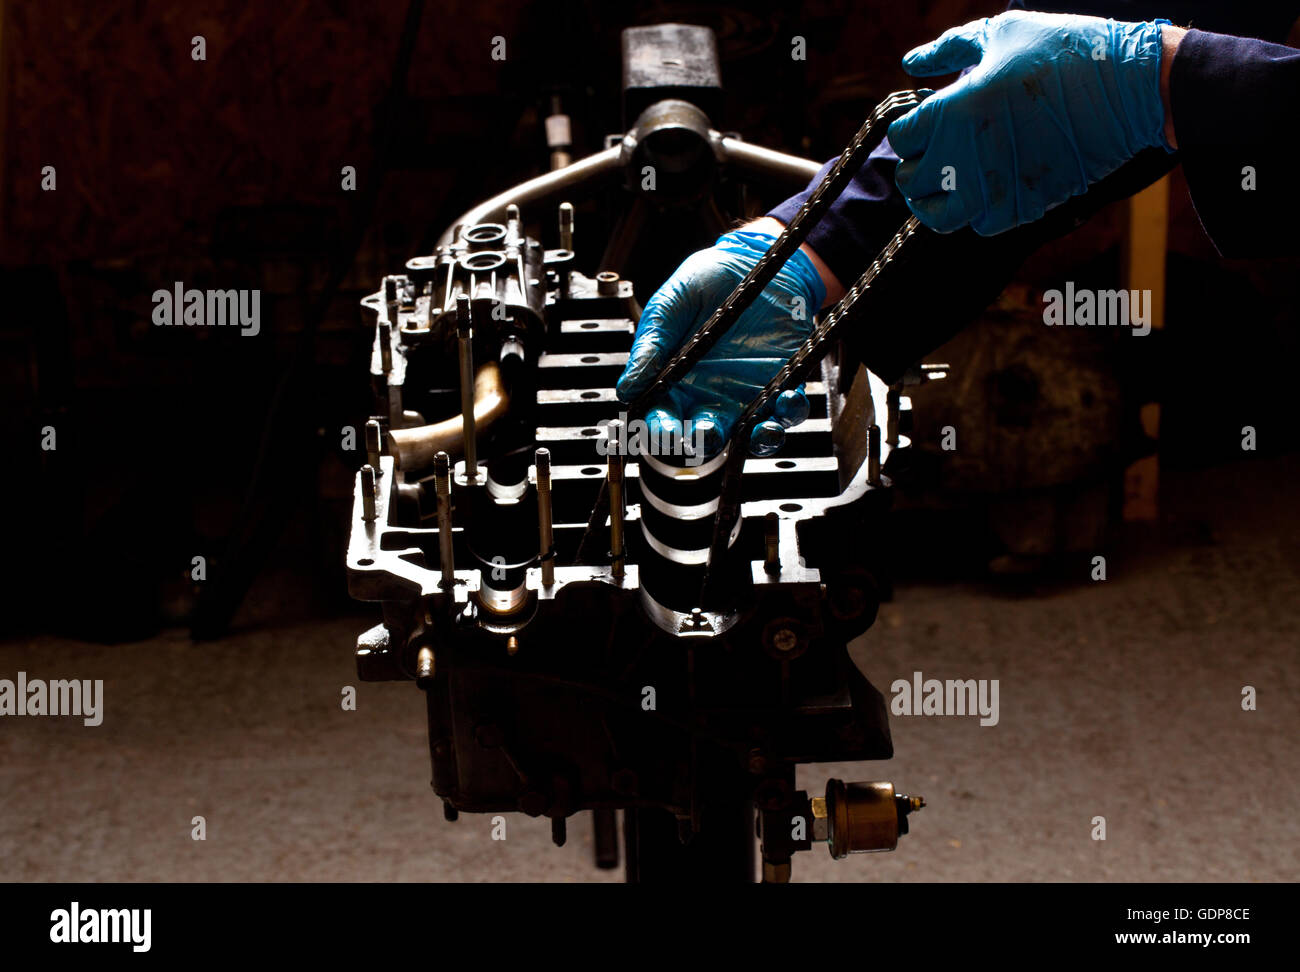 Male mechanic repairing car engine, holding cam chain Stock Photo